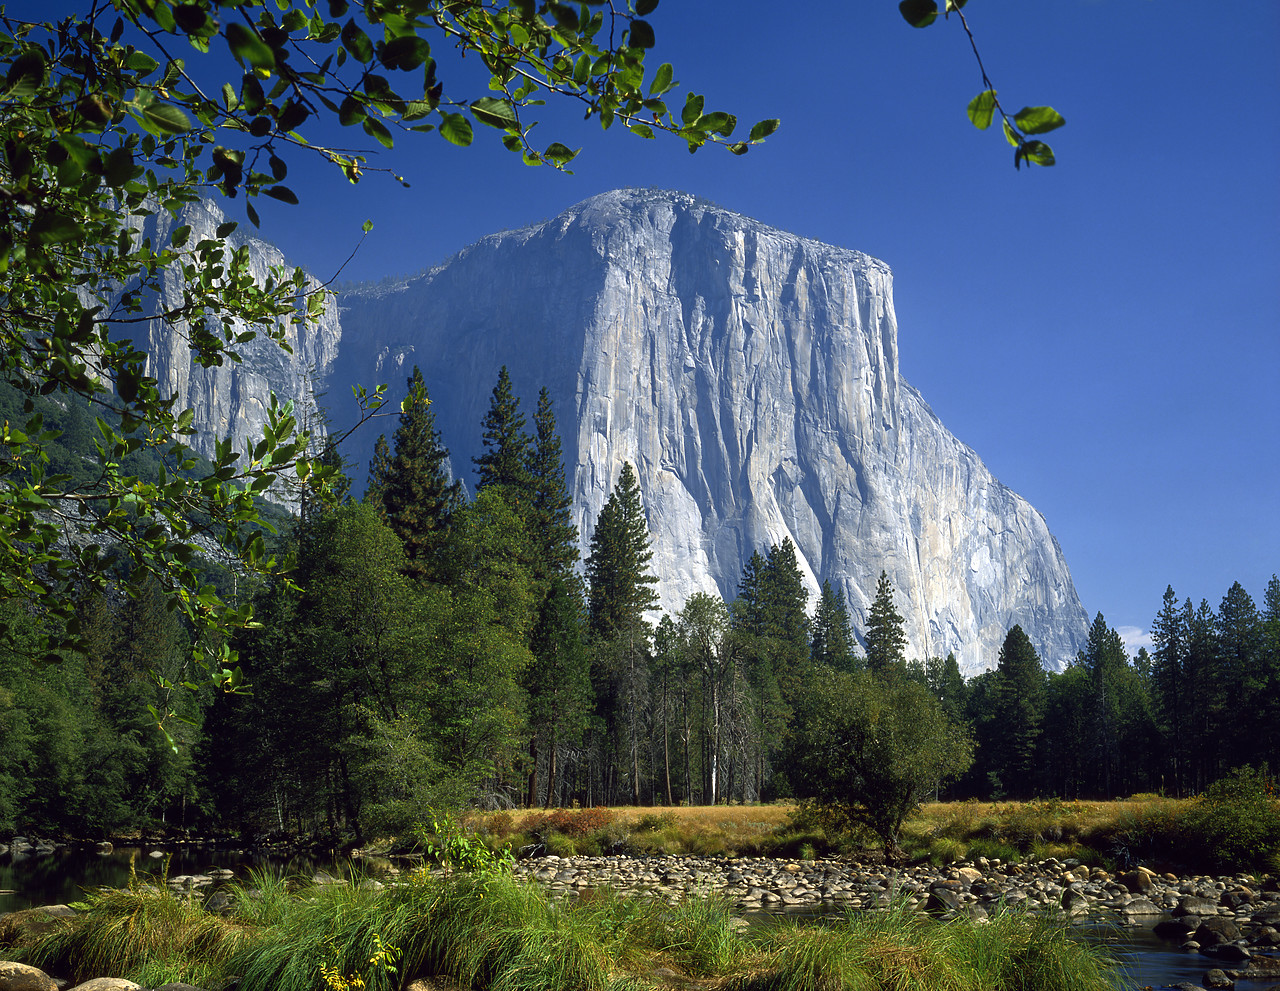 #881596-1 - El Capitan, Yosemite National Park, California, USA